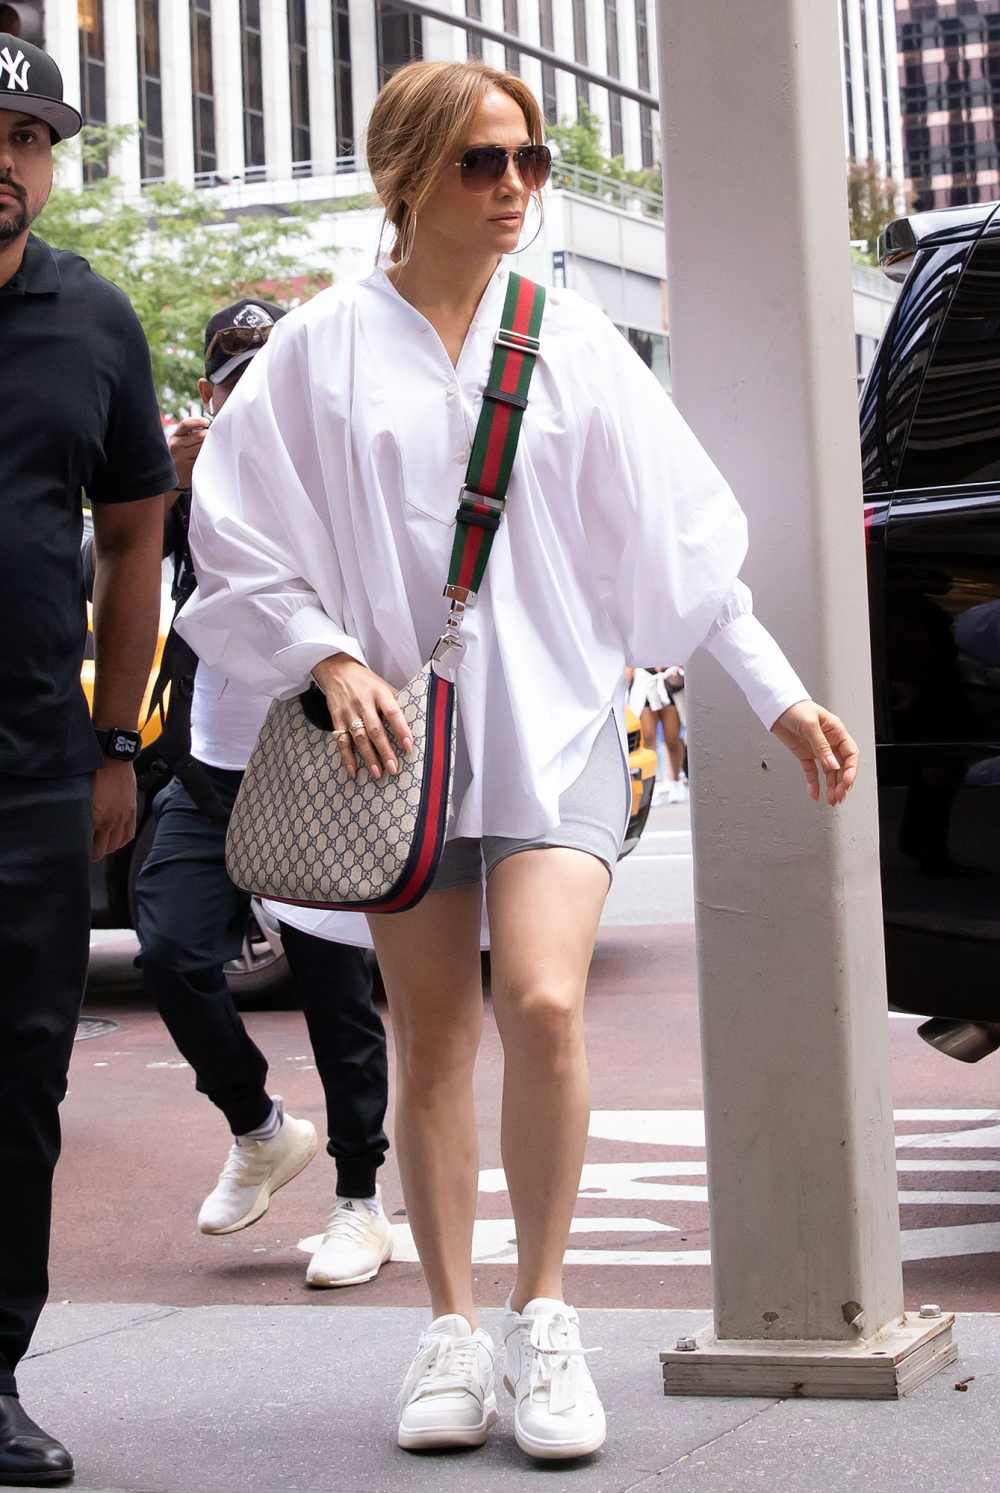 Jennifer Lopez Rocks Oversized Button-Up, Biker Shorts in NYC | Us Weekly